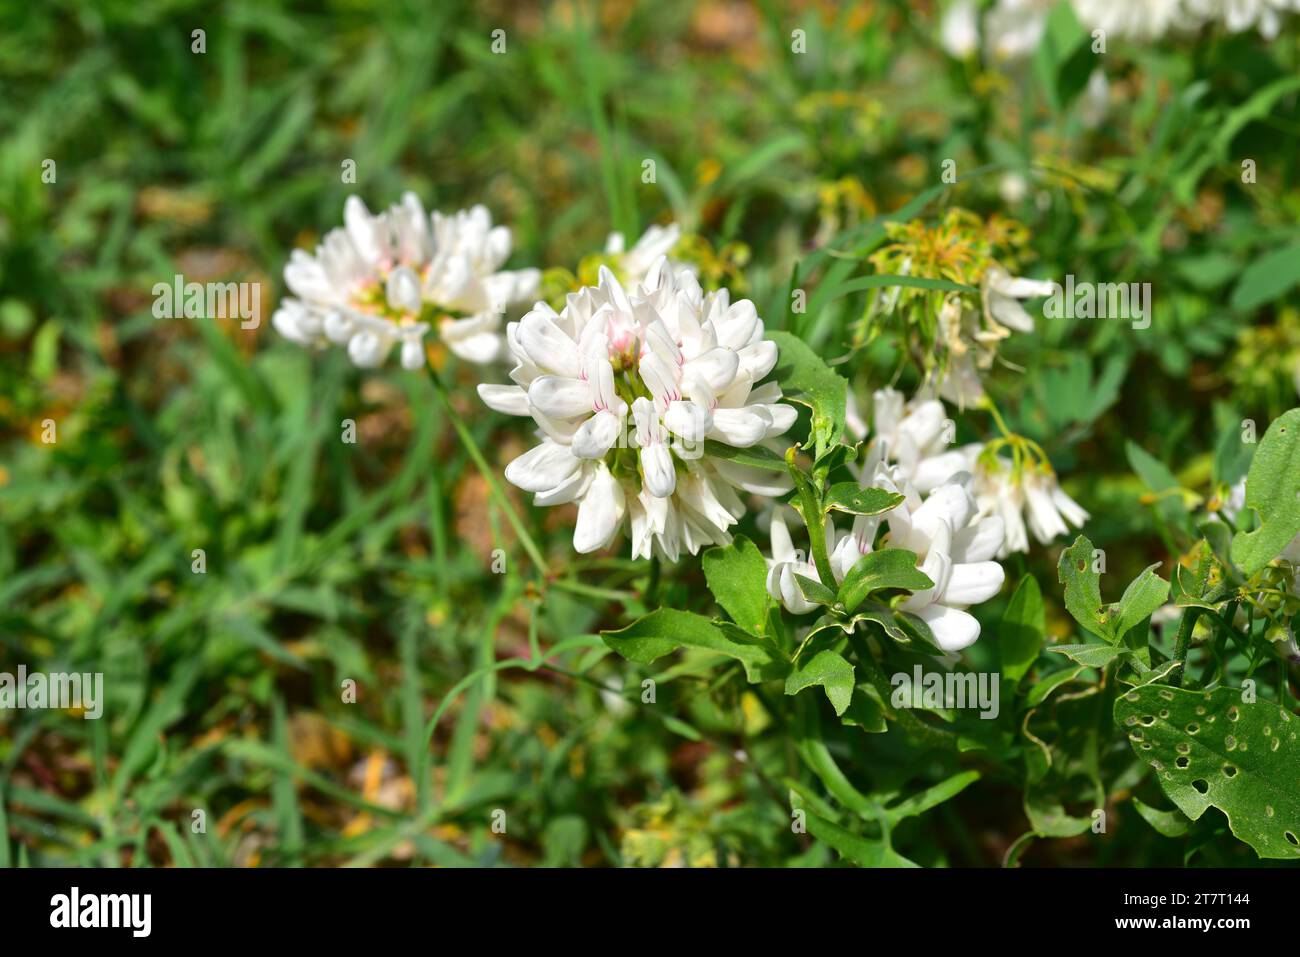 White crownvetch (Coronilla globosa or Securigera globosa) is a shrub endemic to Crete, Greece. Blooming plant. Stock Photo